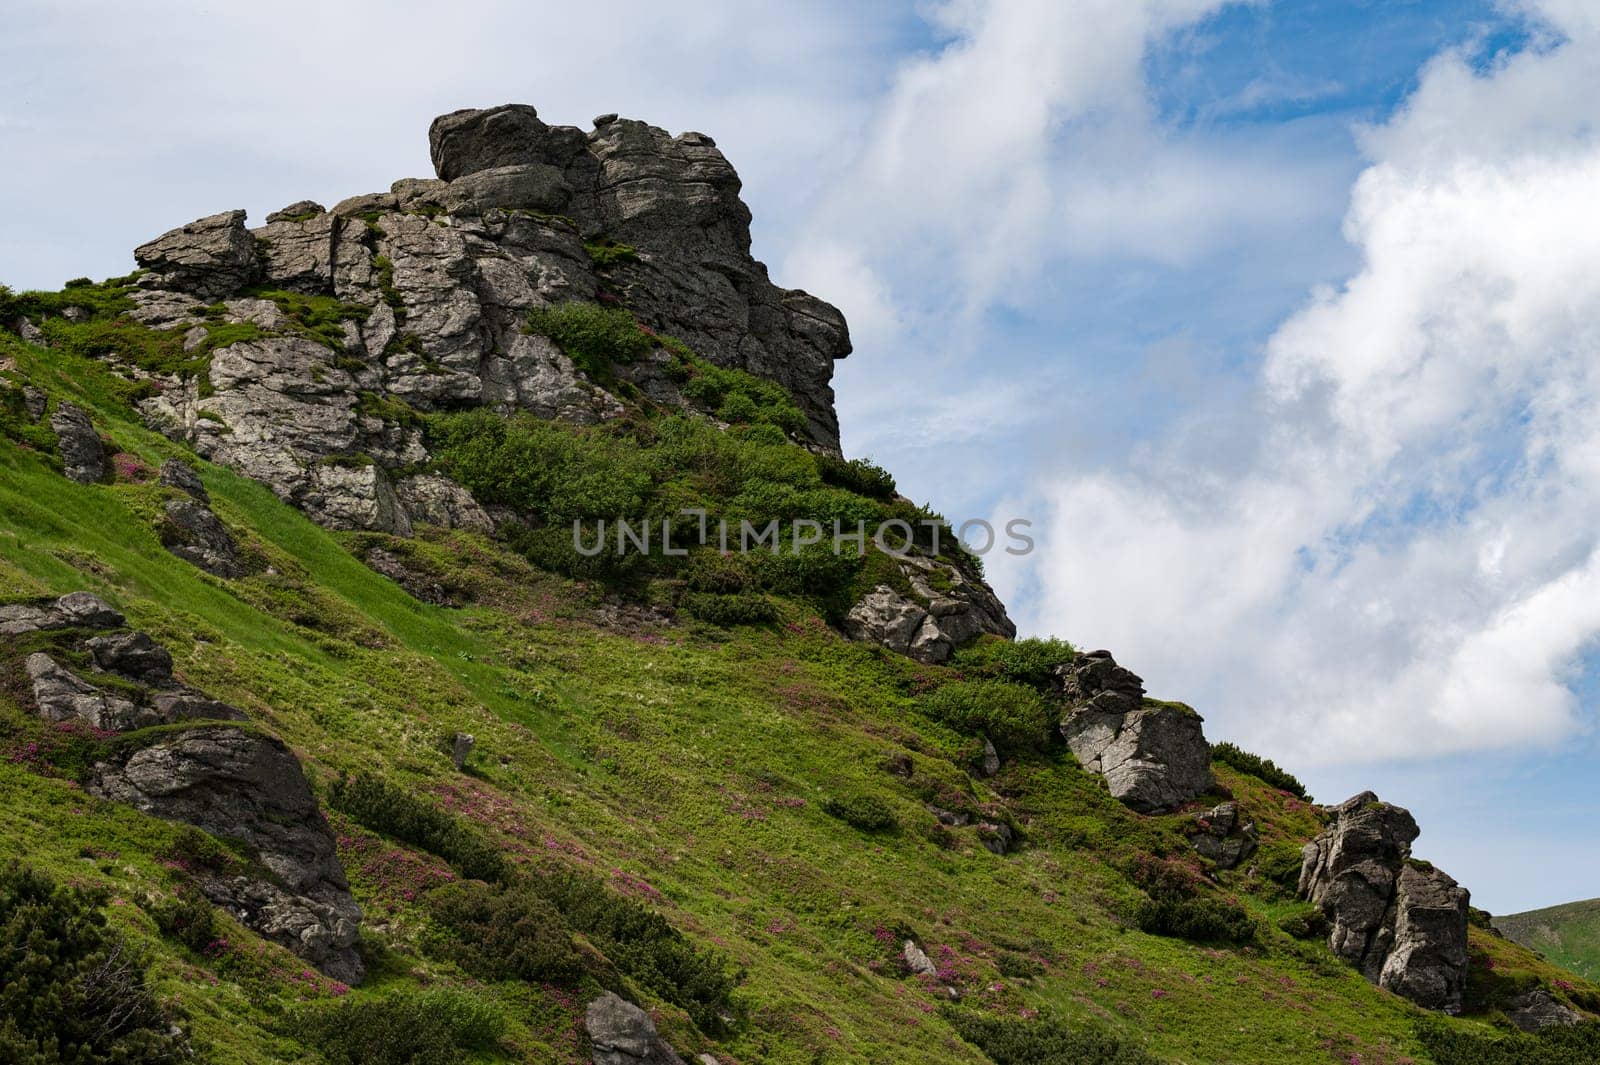 Mount Vukhaty Kamin in the Carpathians of Ukraine. by Niko_Cingaryuk